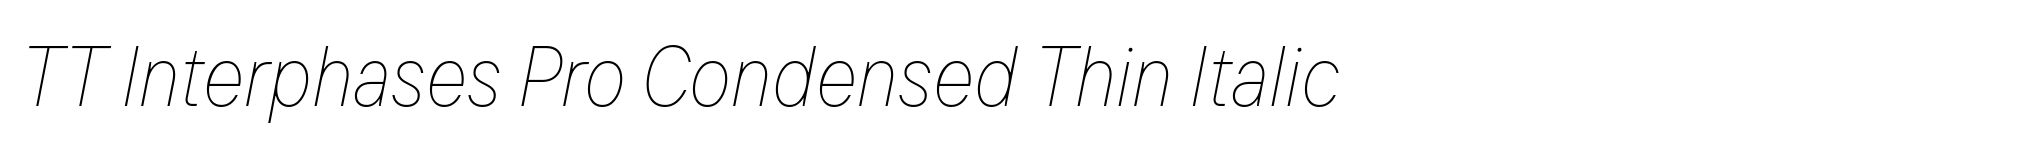 TT Interphases Pro Condensed Thin Italic image